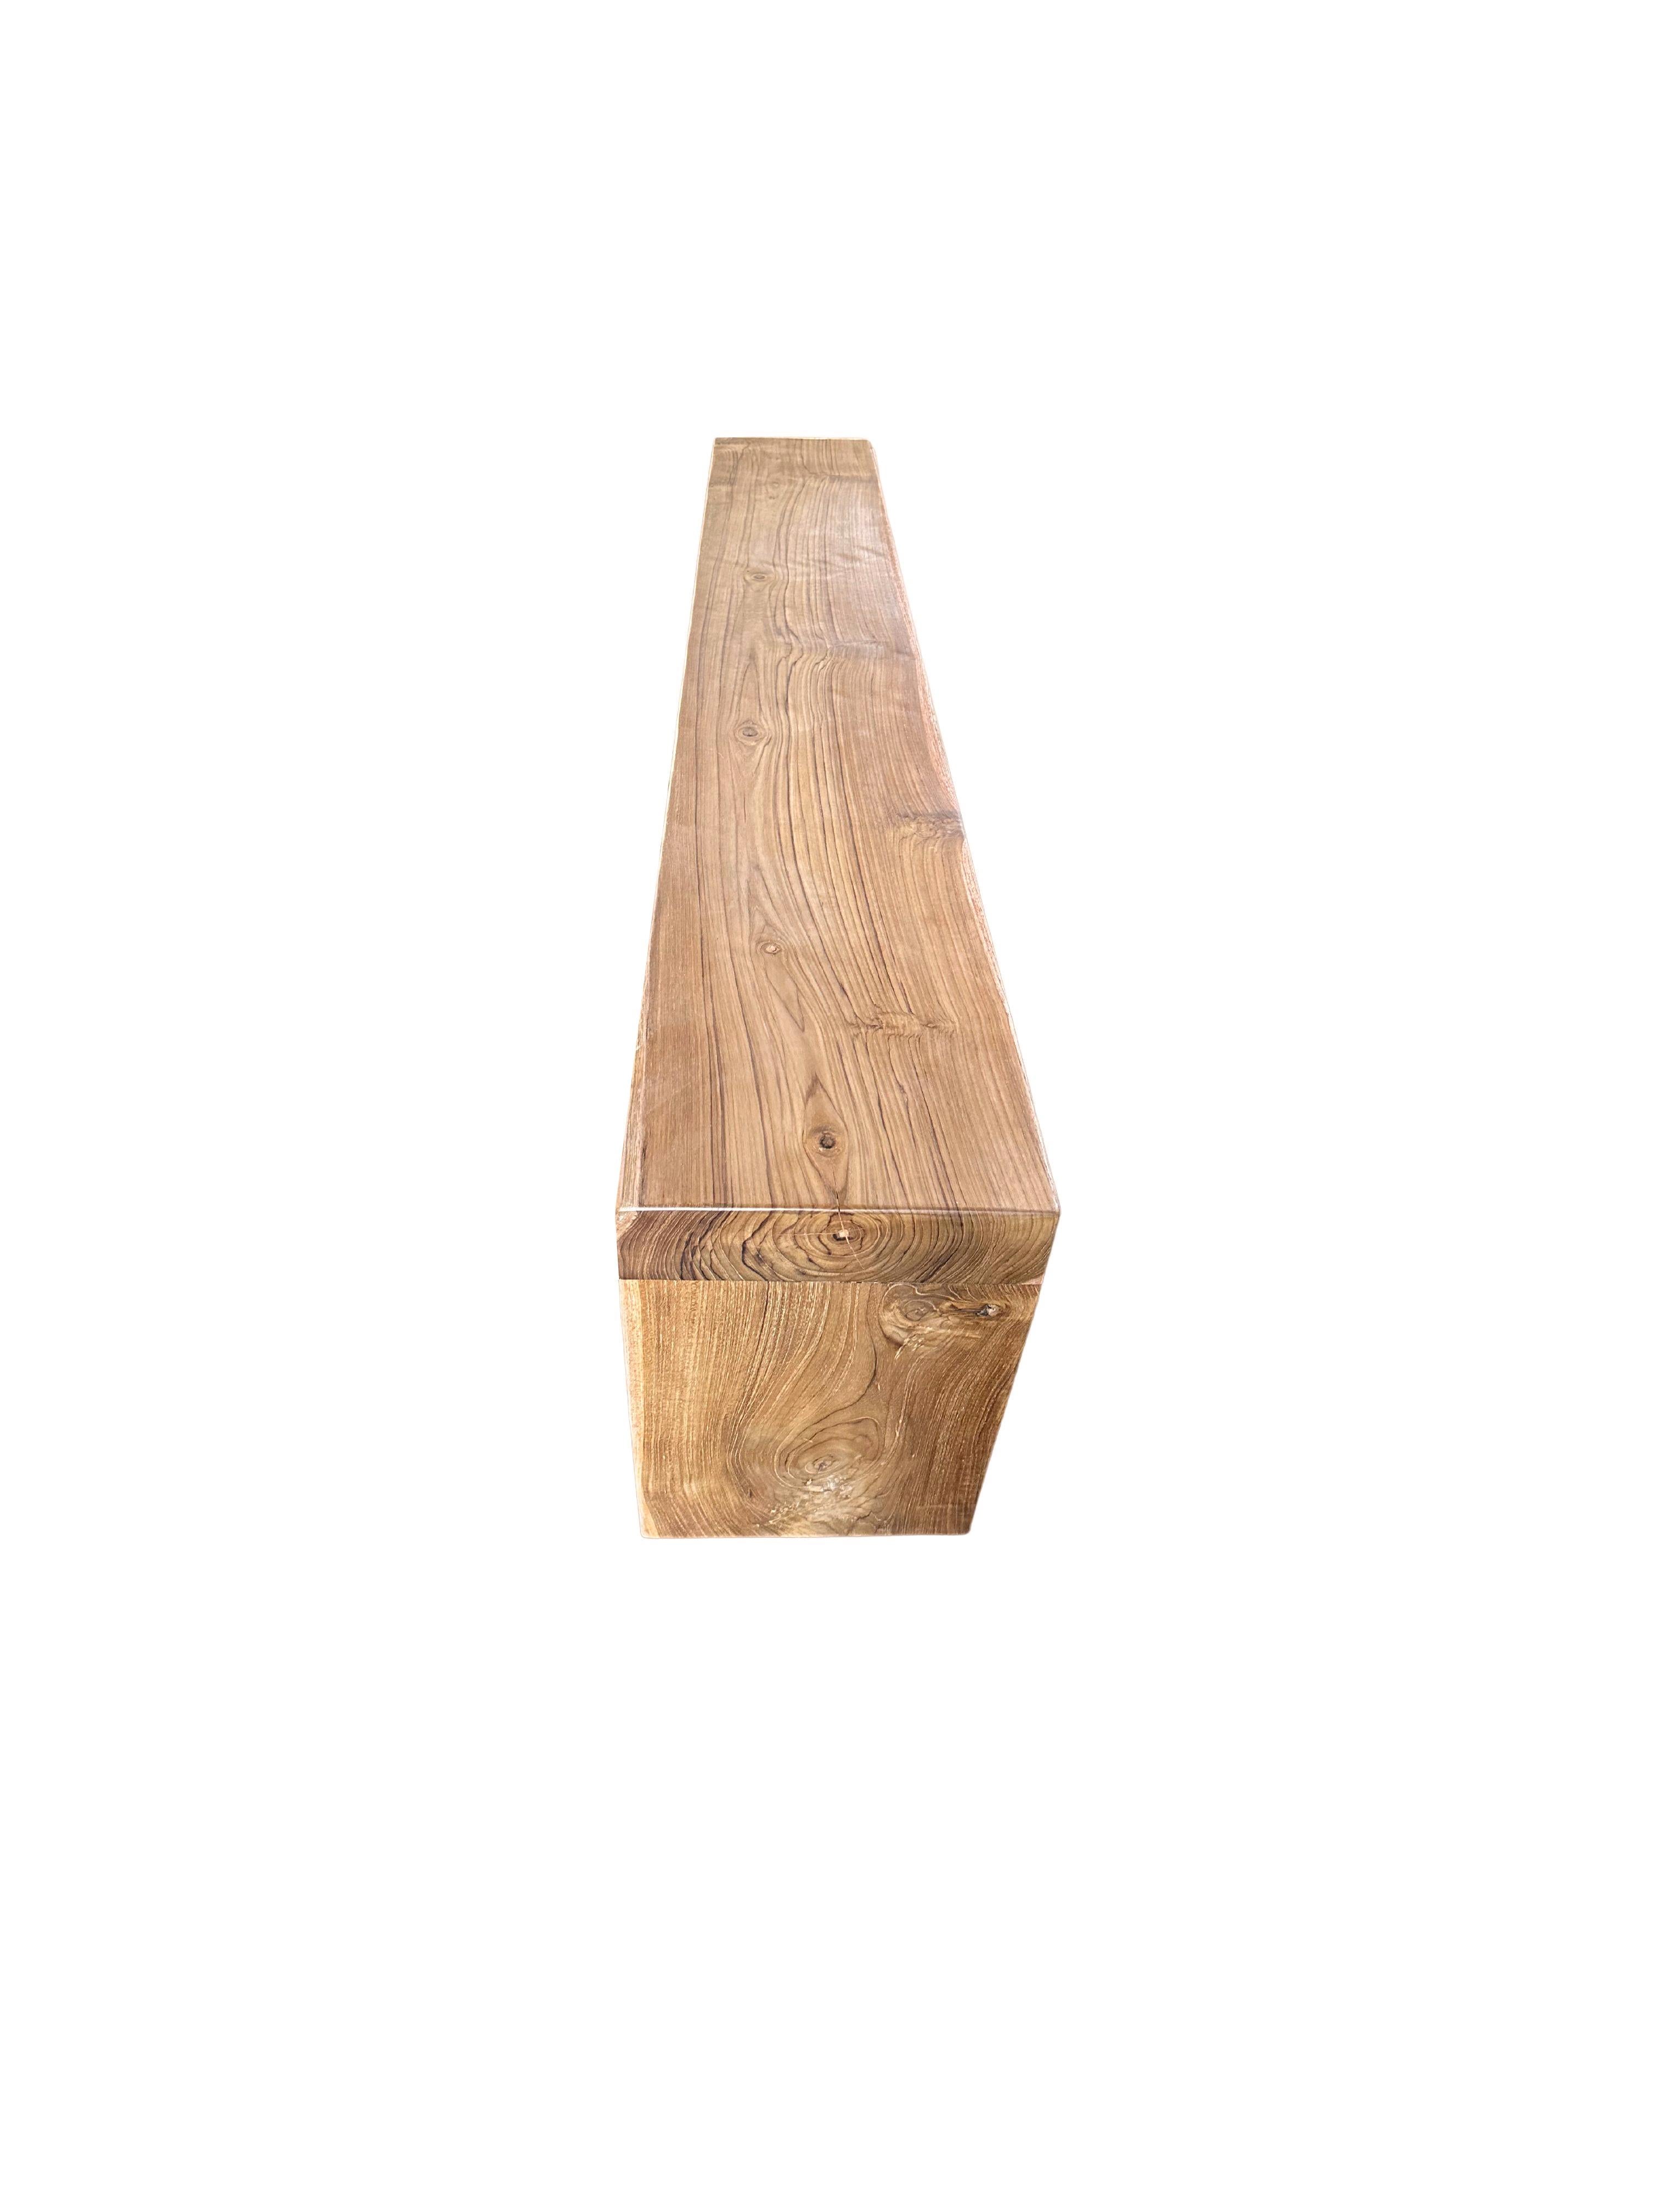 Contemporary Sculptural Teak Wood Bench Modern Organic For Sale